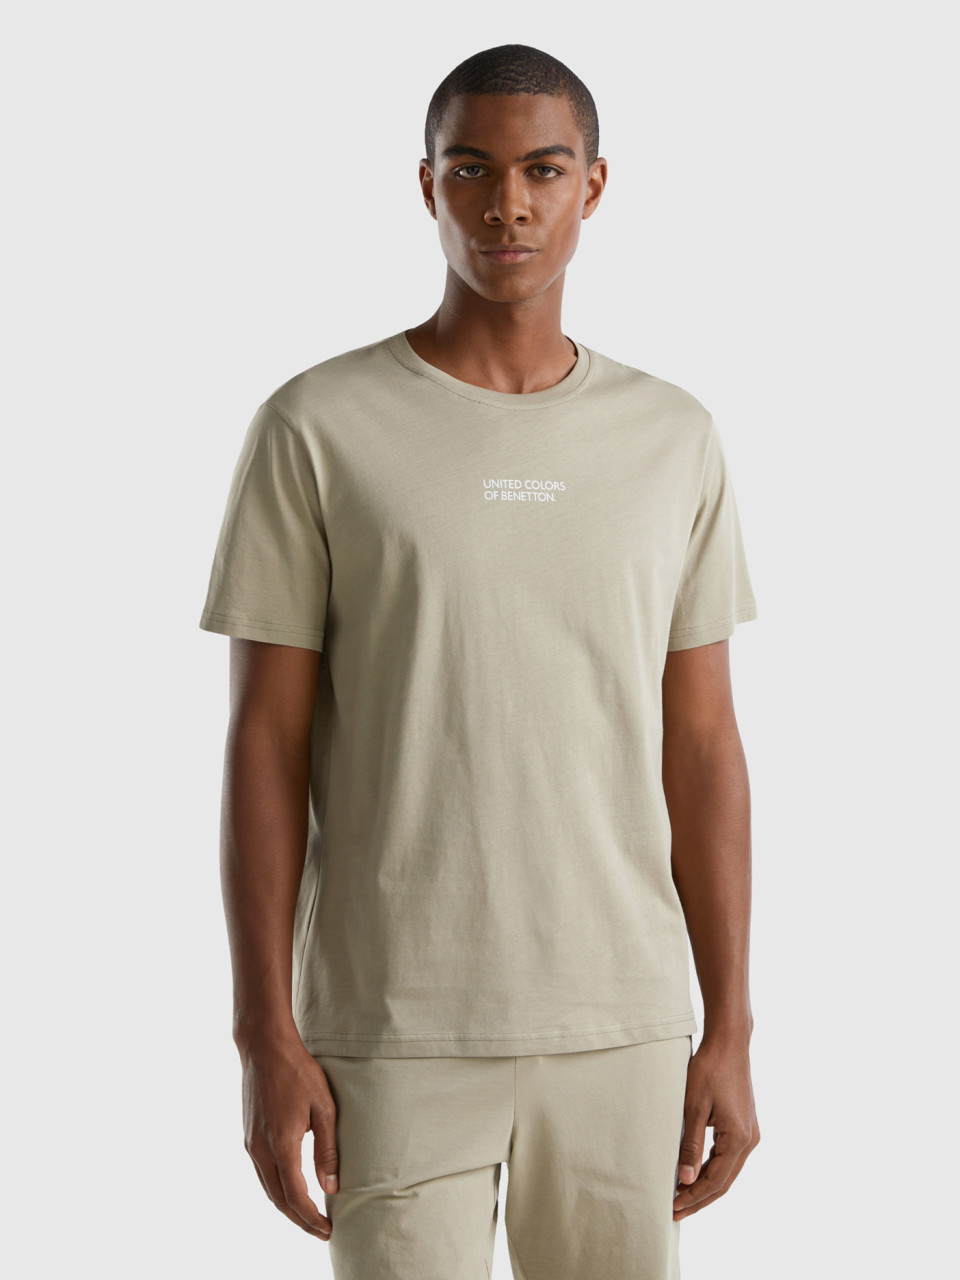 Benetton, Camiseta Con Estampado De Logotipo, Verde Claro, Hombre